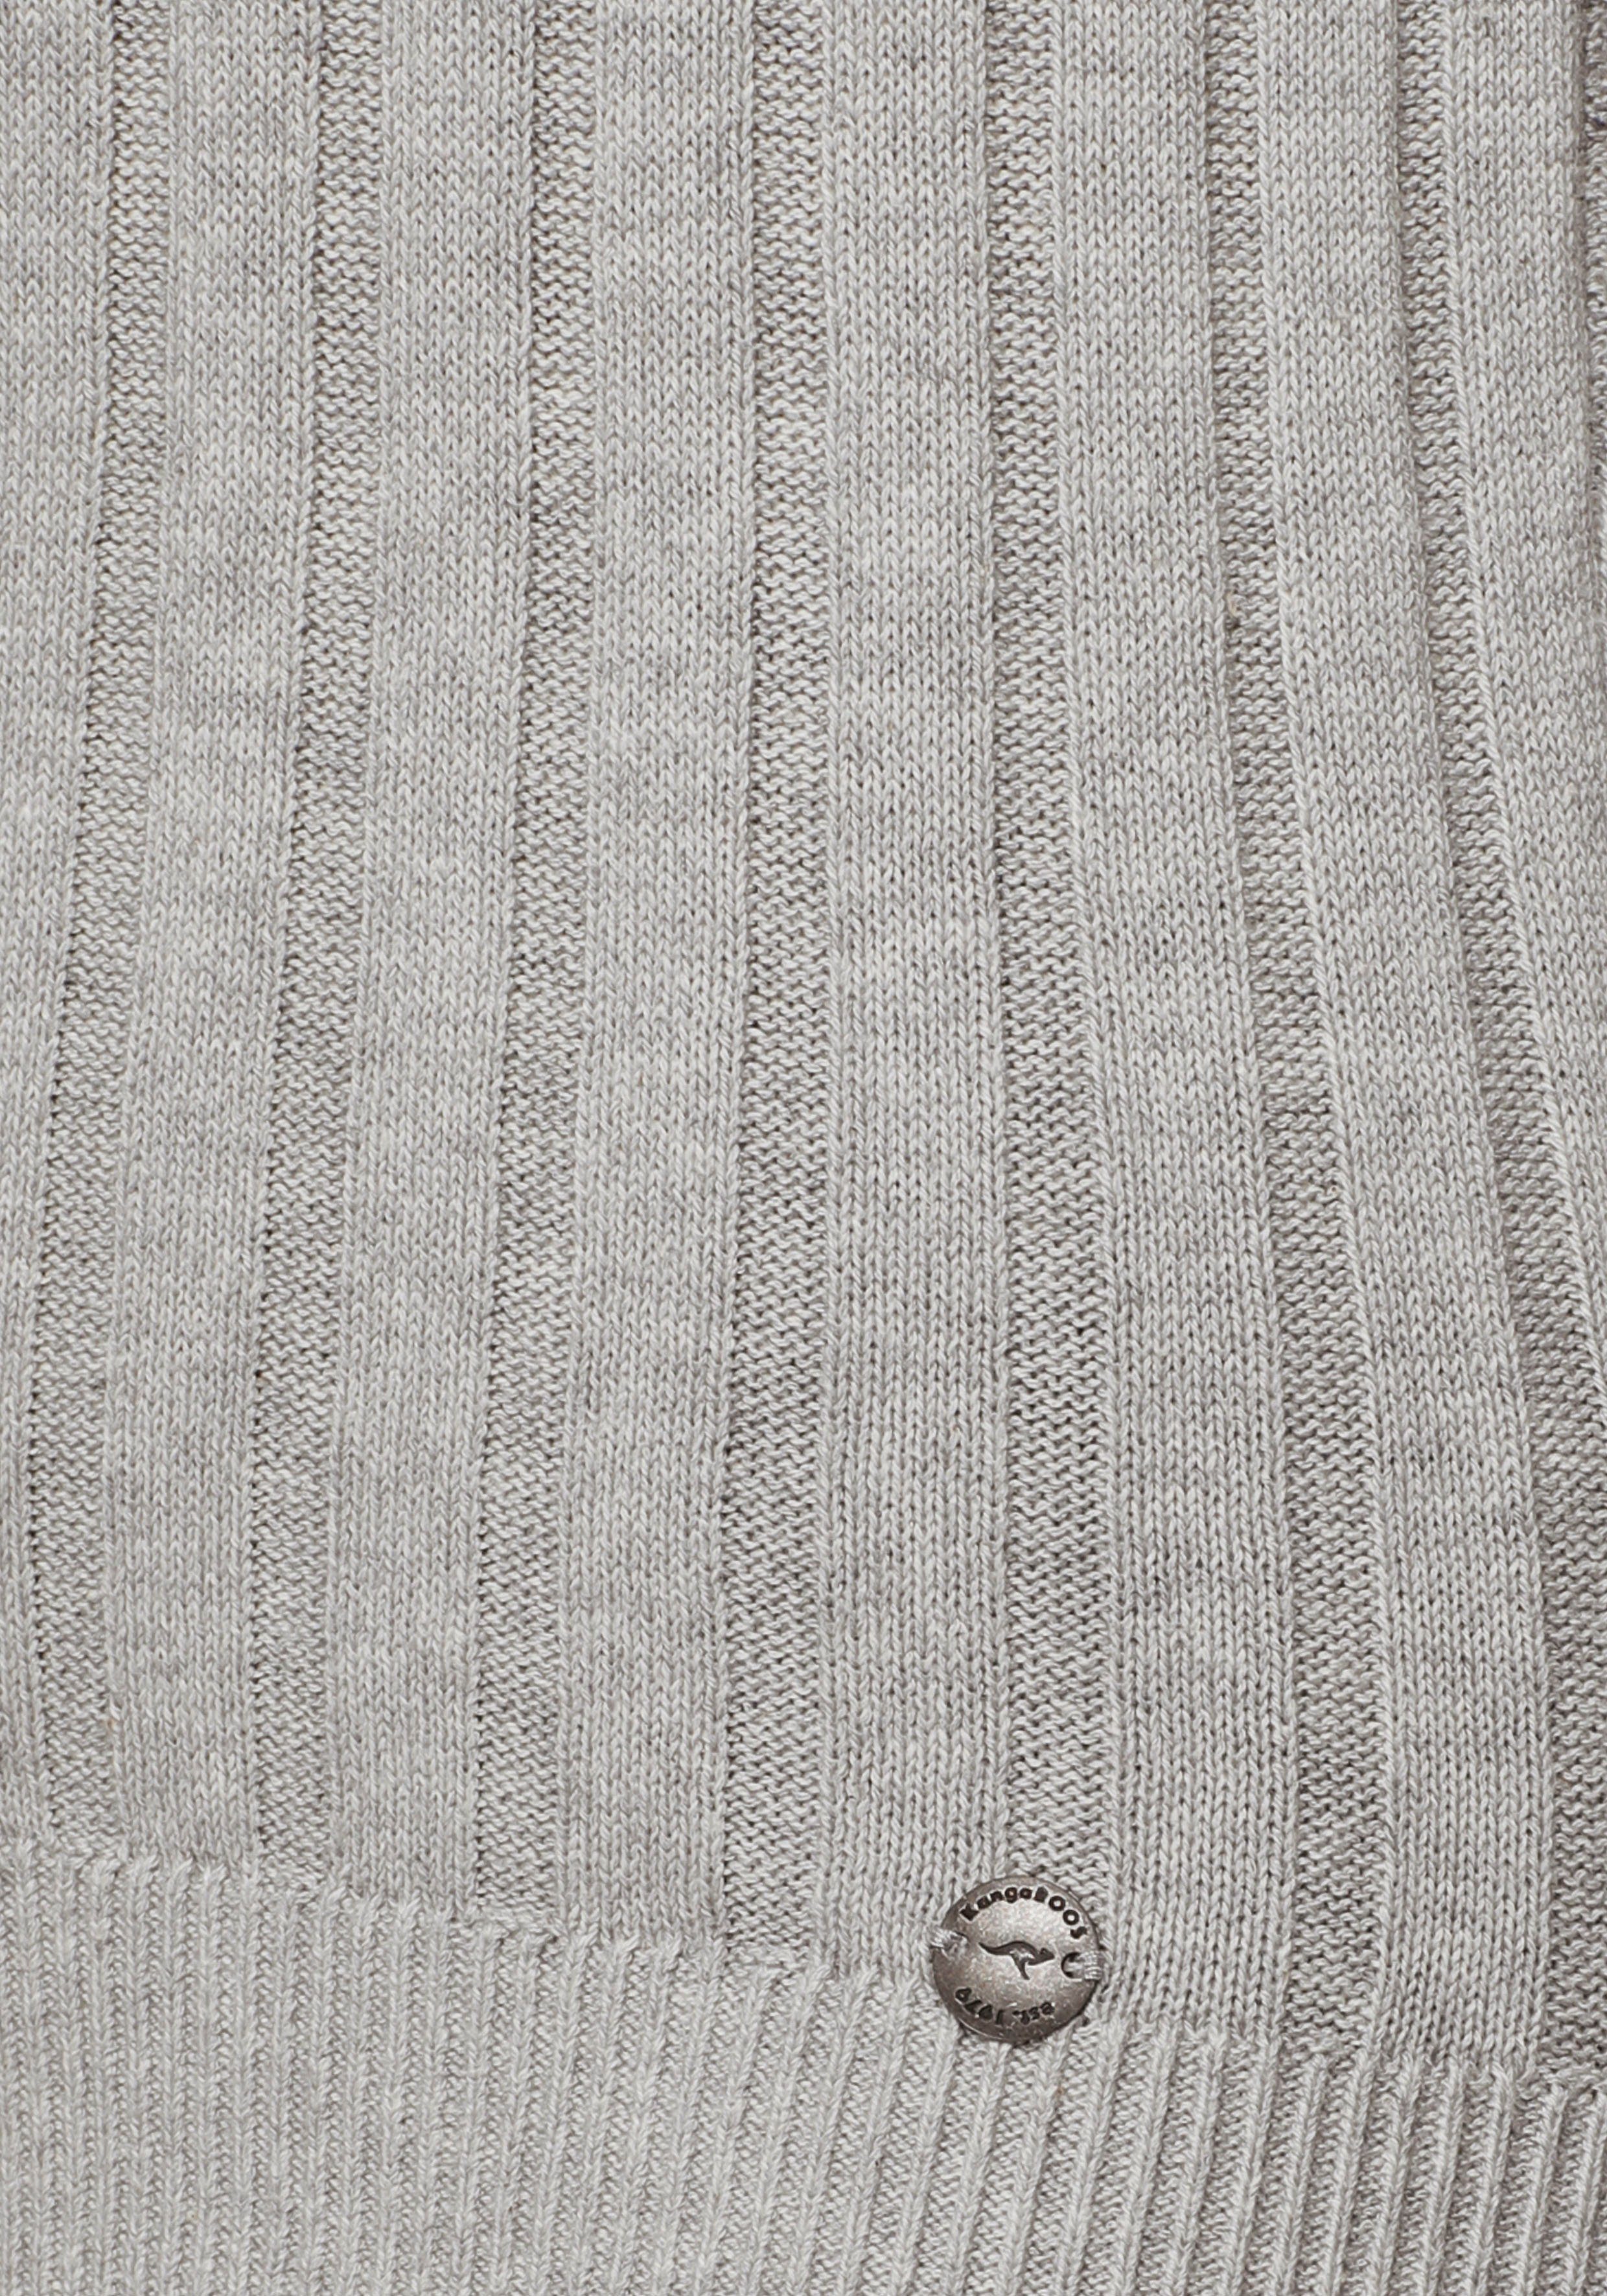 hellgrau-melange geripptem in V-Ausschnitt-Pullover KangaROOS Feinstrick breit